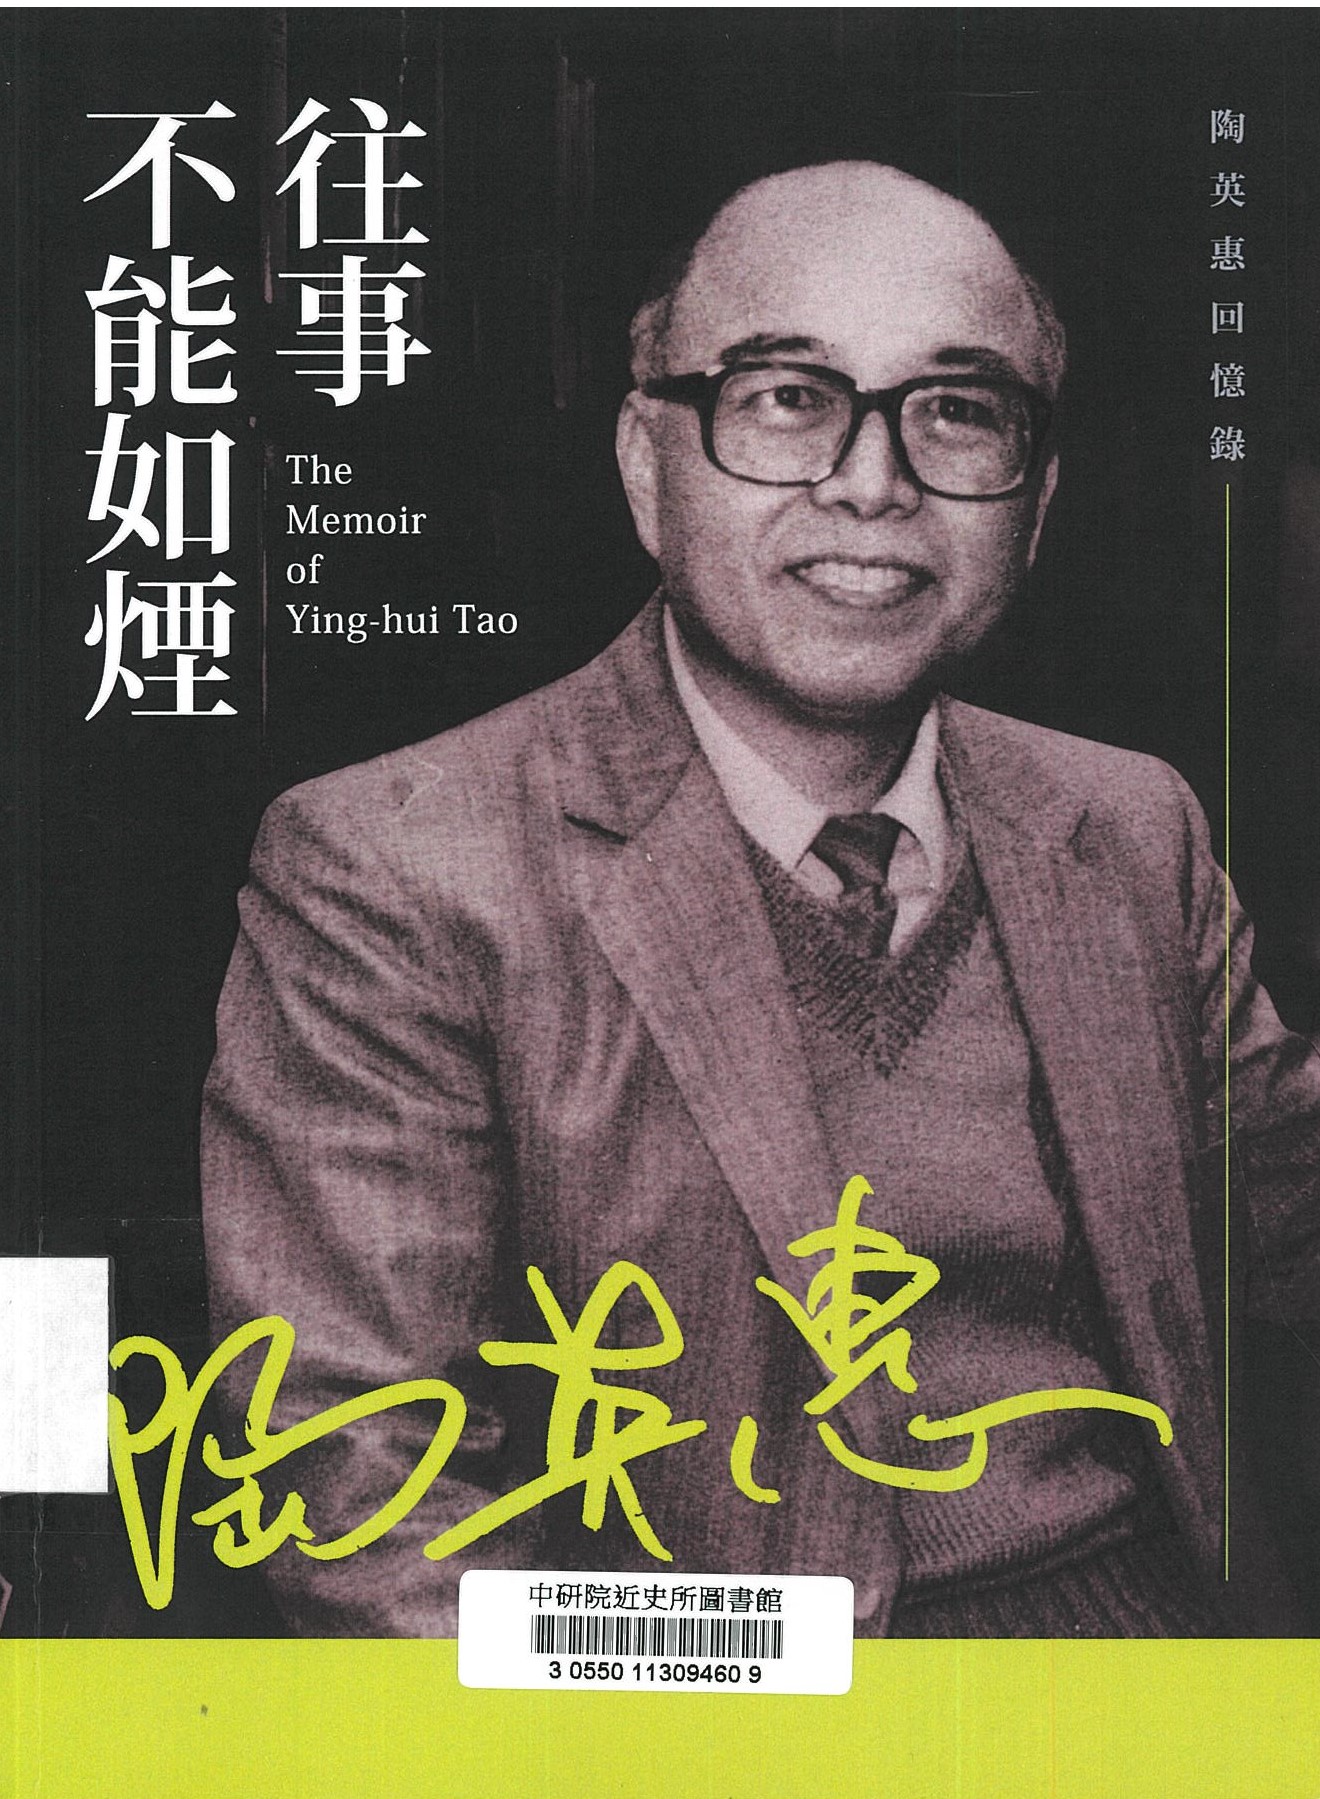 往事不能如煙 : 陶英惠回憶錄 = The memoir of Ying-hui Tao